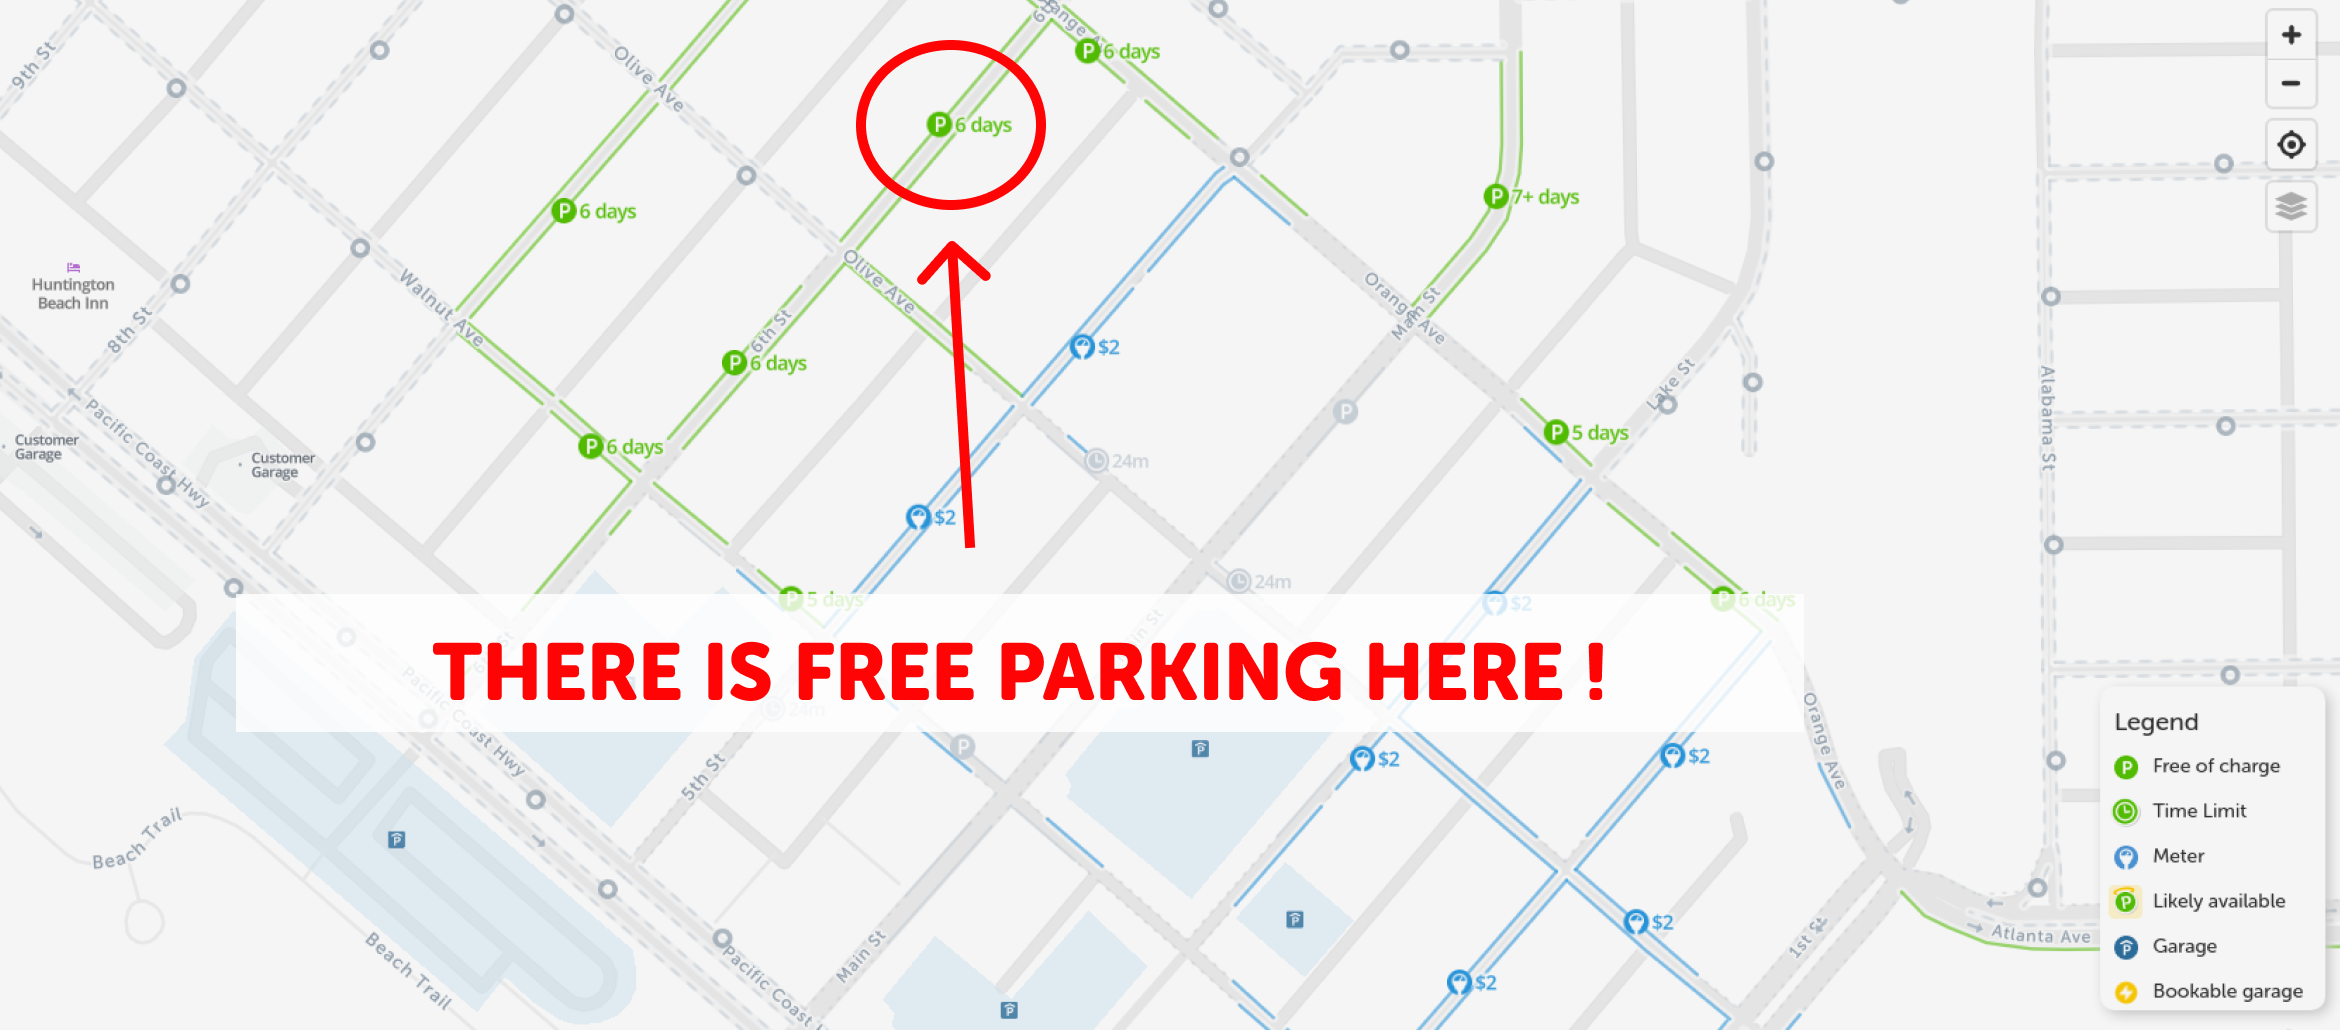 2021 Map of Free Parking in Huntington beach SpotAngels